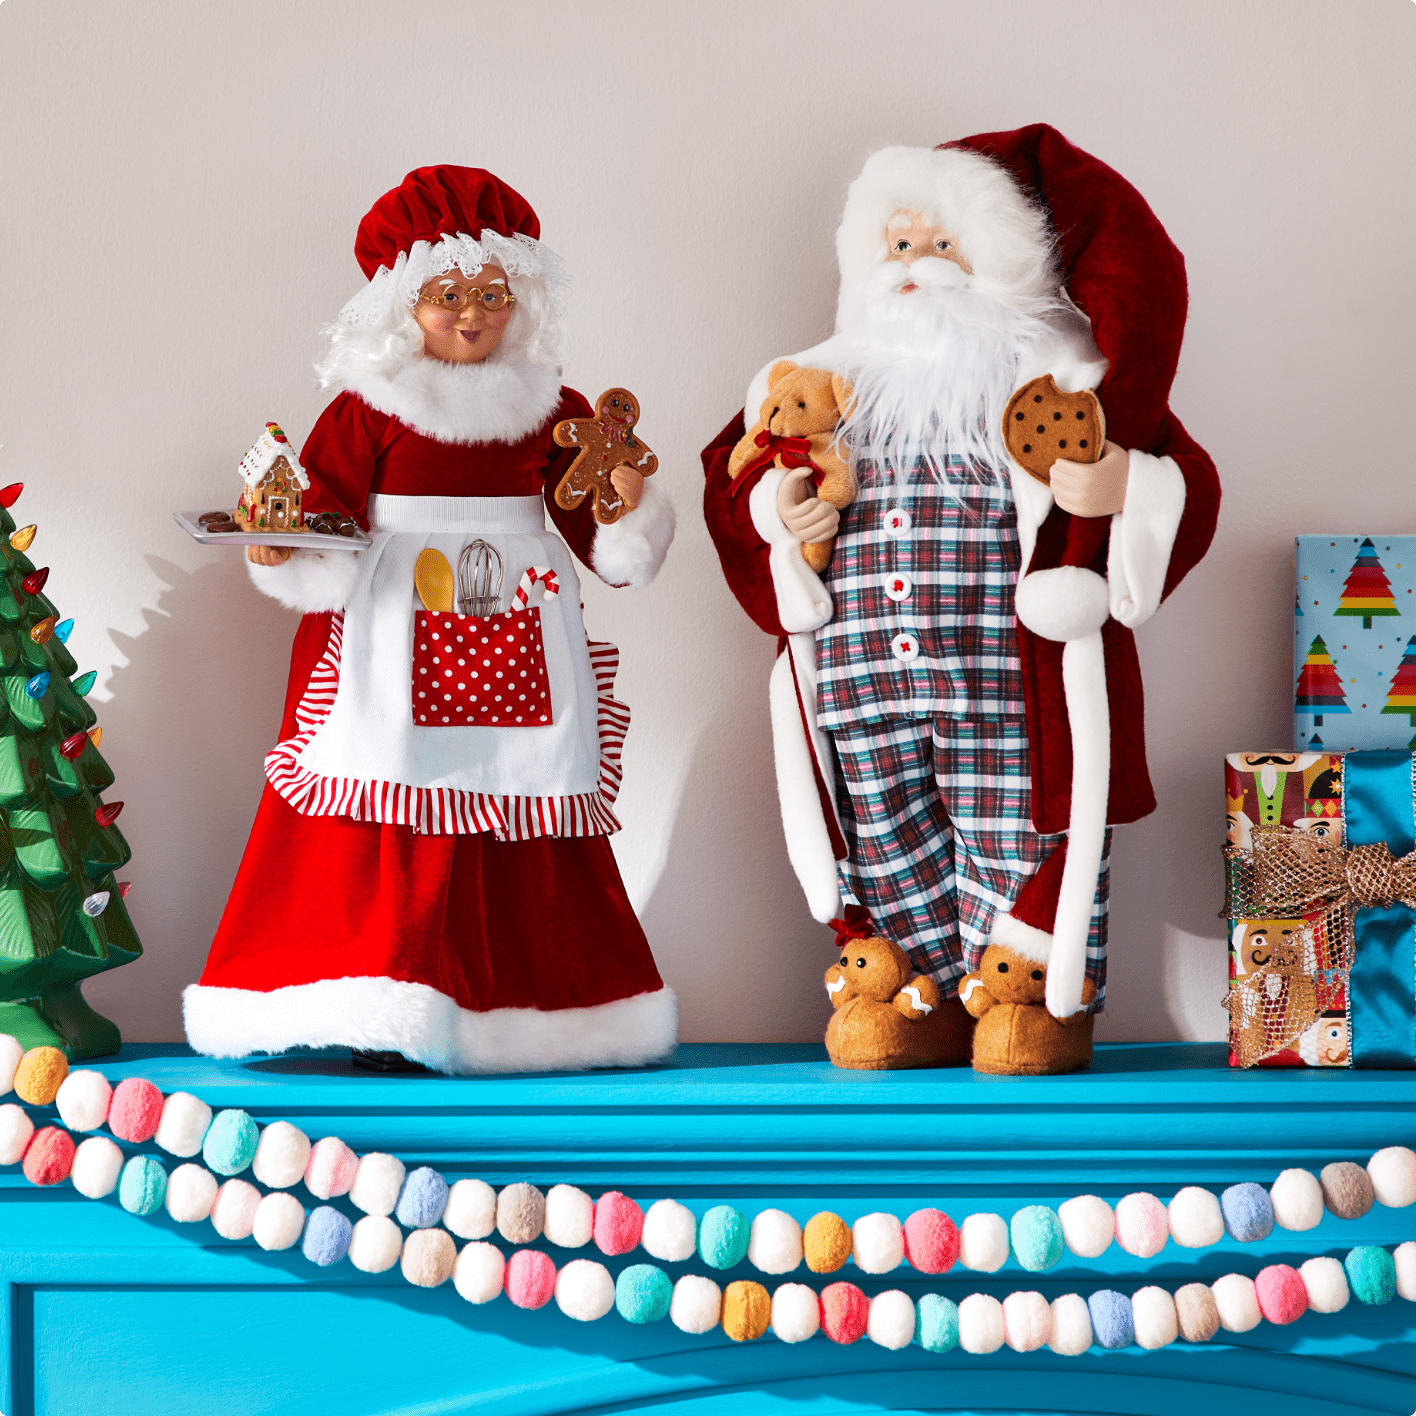 Santa and Mrs. Claus decor on mantel. 